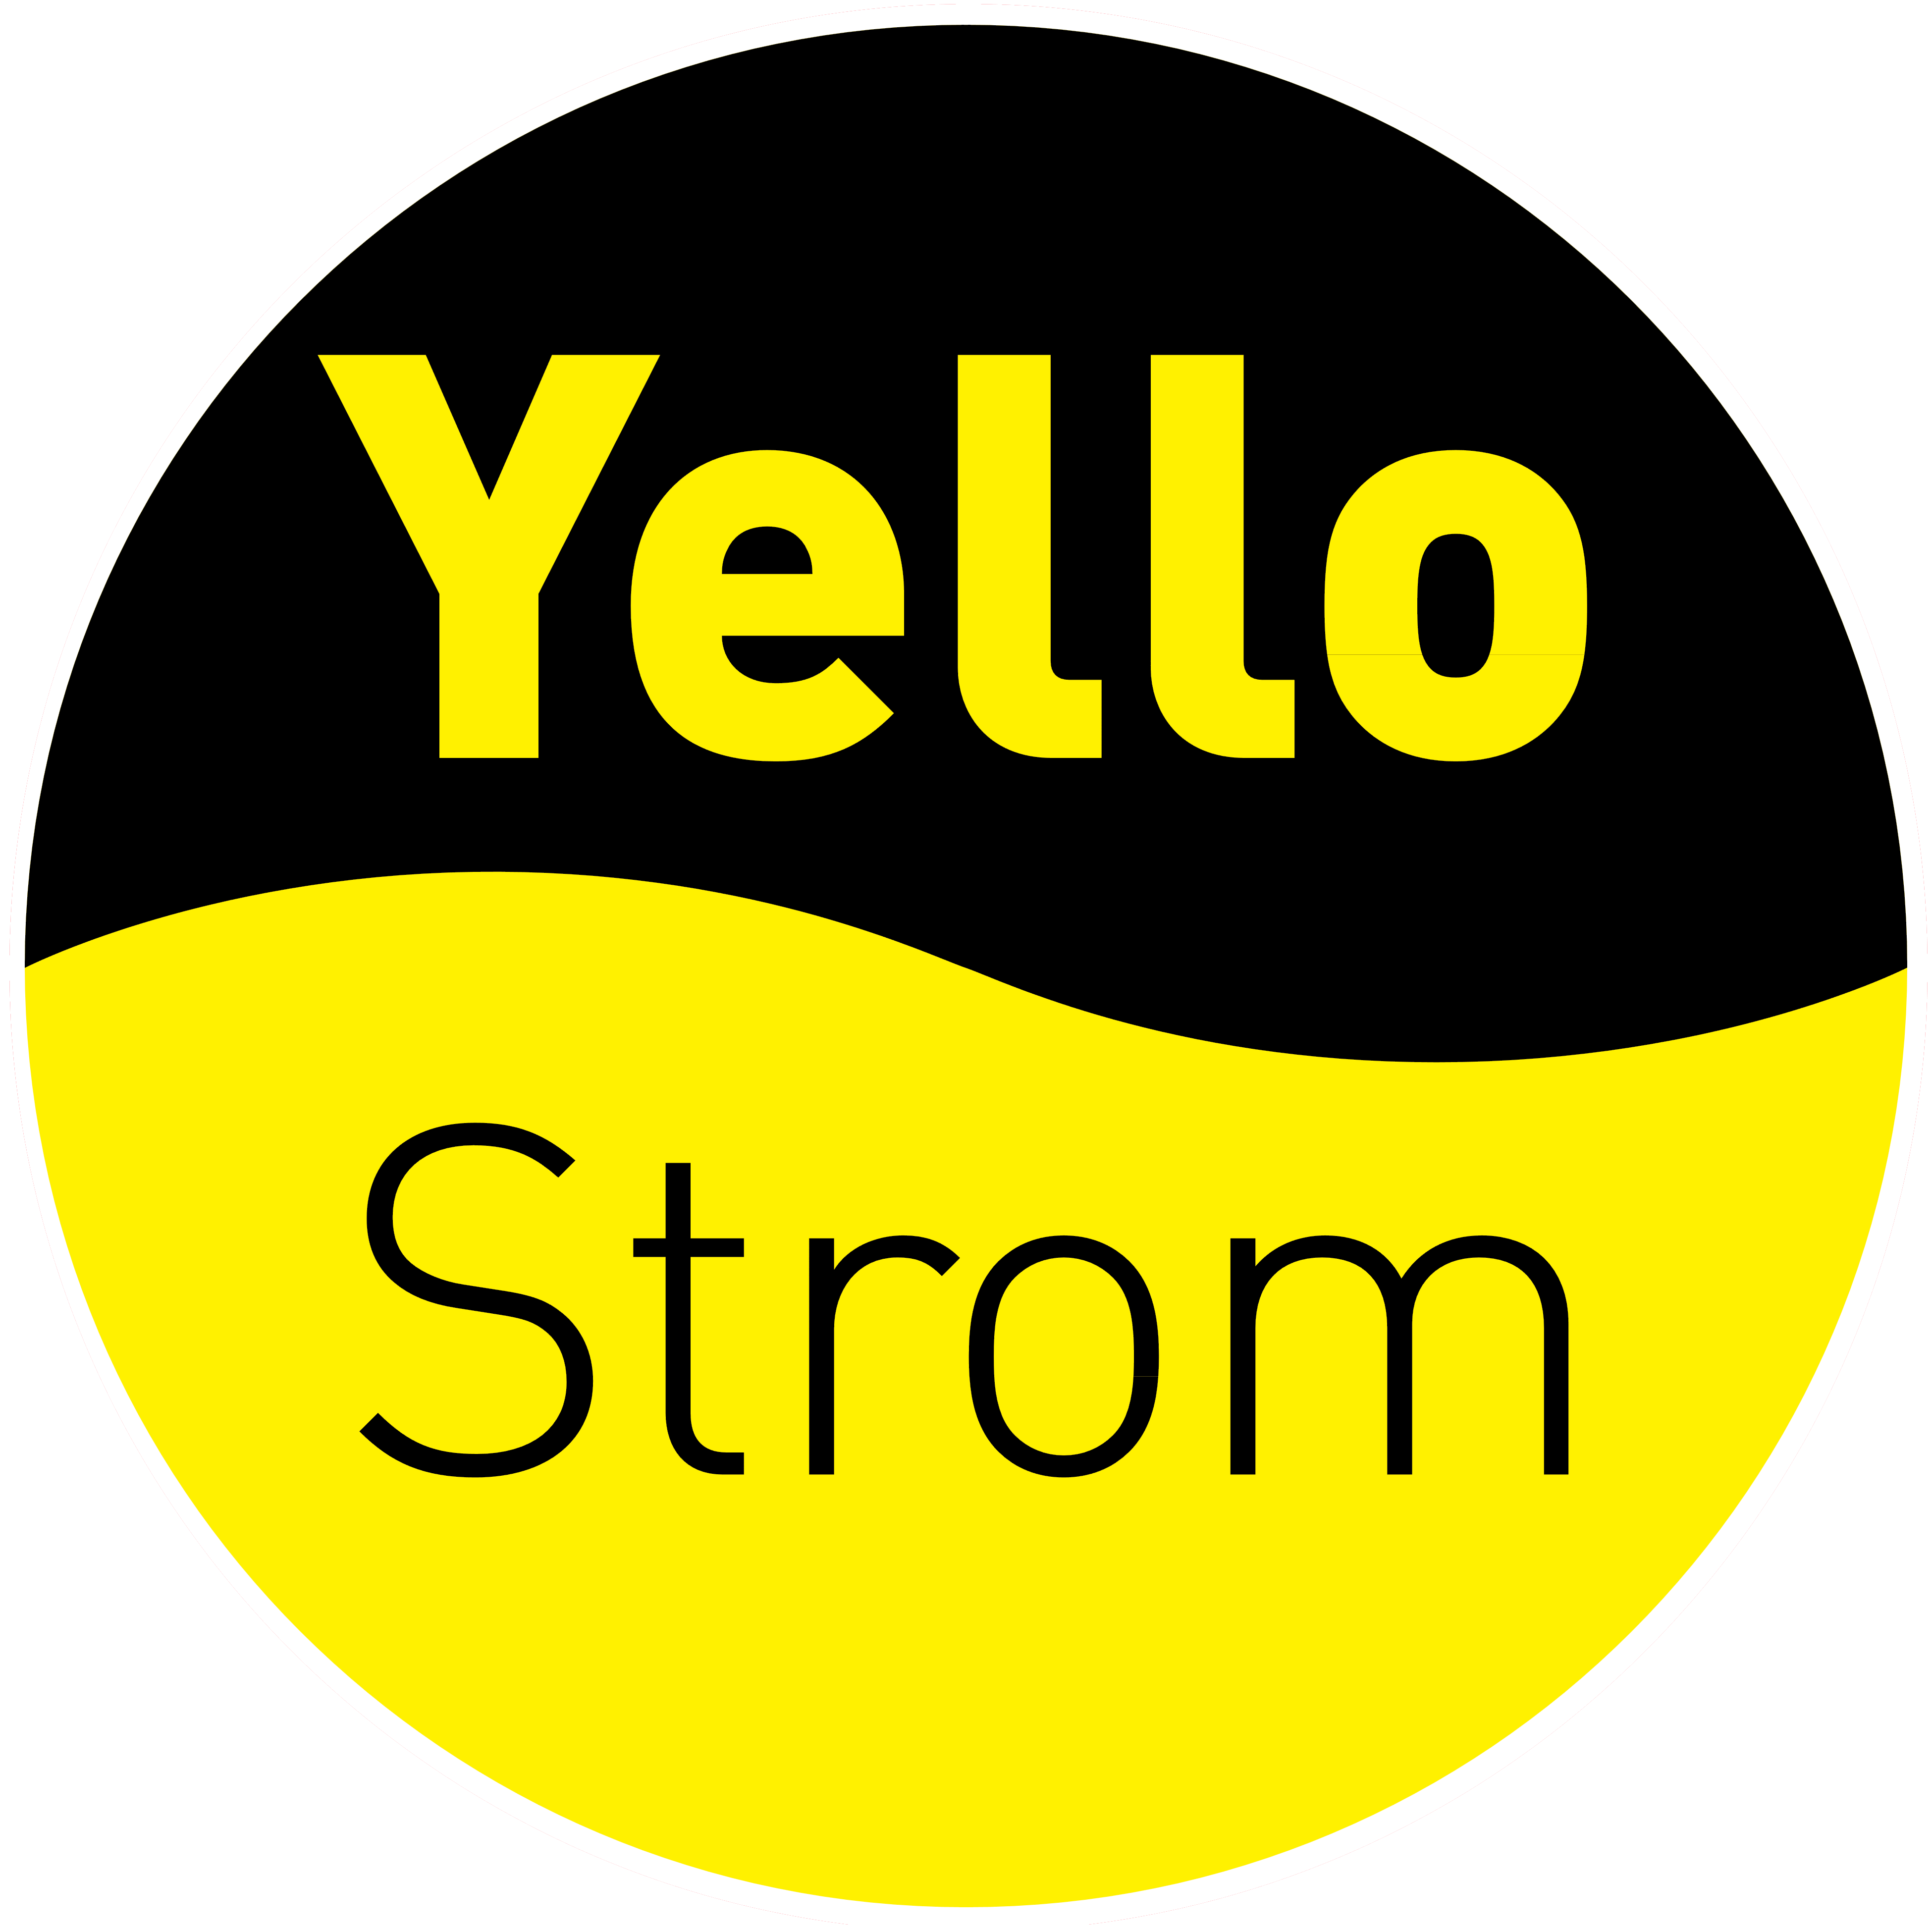 Yello Logo - Yello Strom – Logos Download